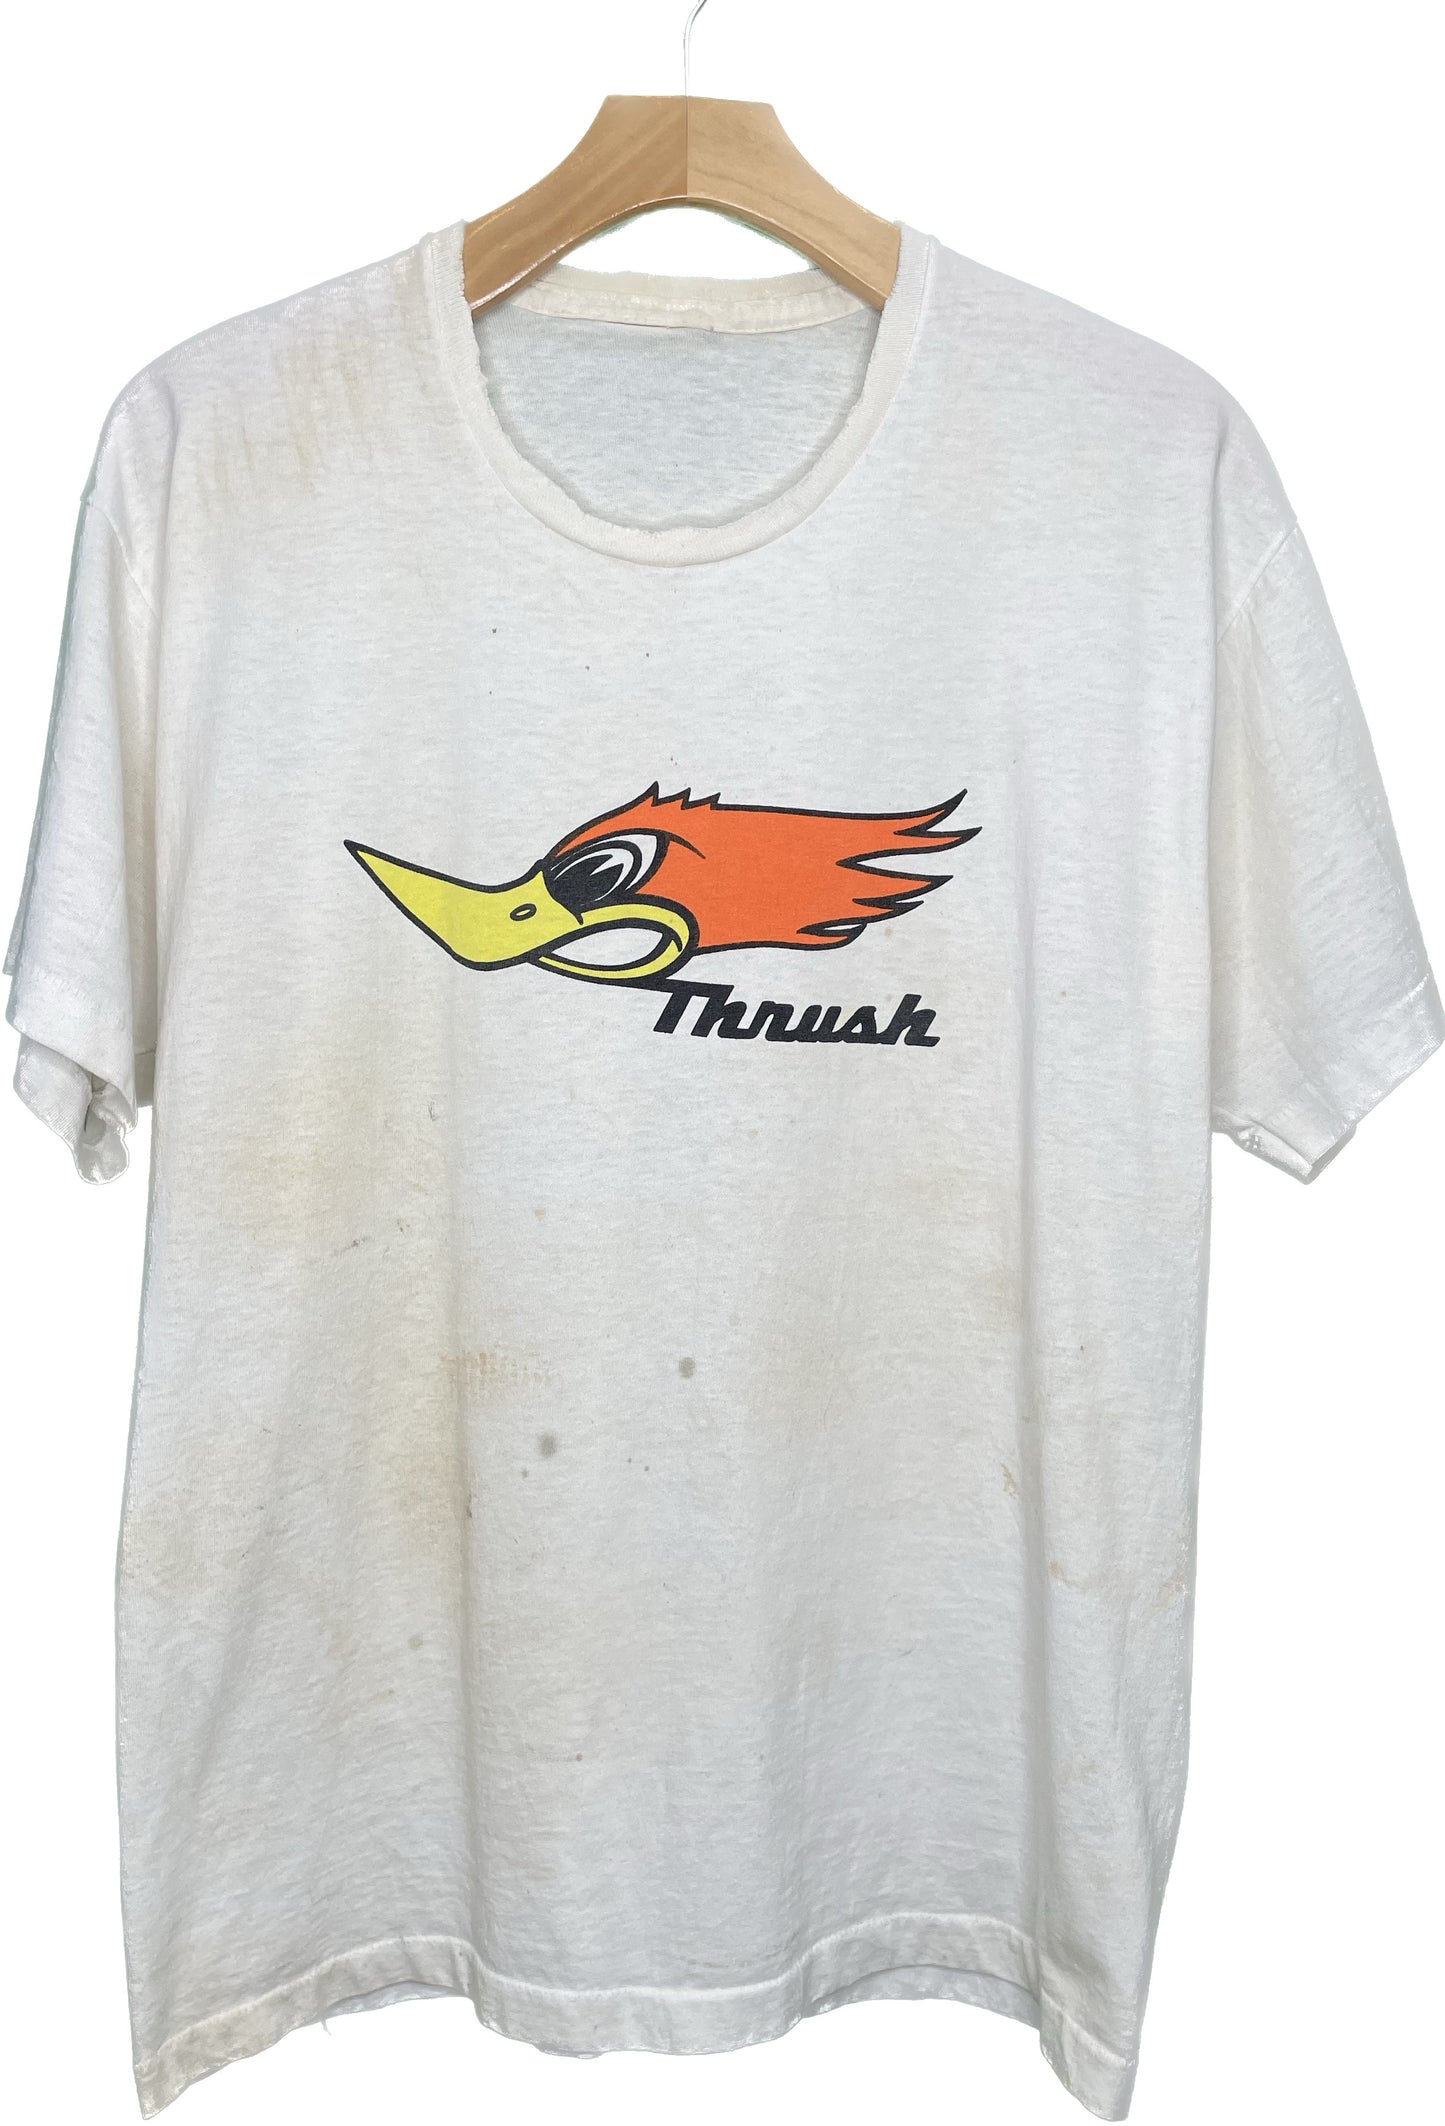 Vintage L Thrush Muffler Vintage 80s T-Shirt